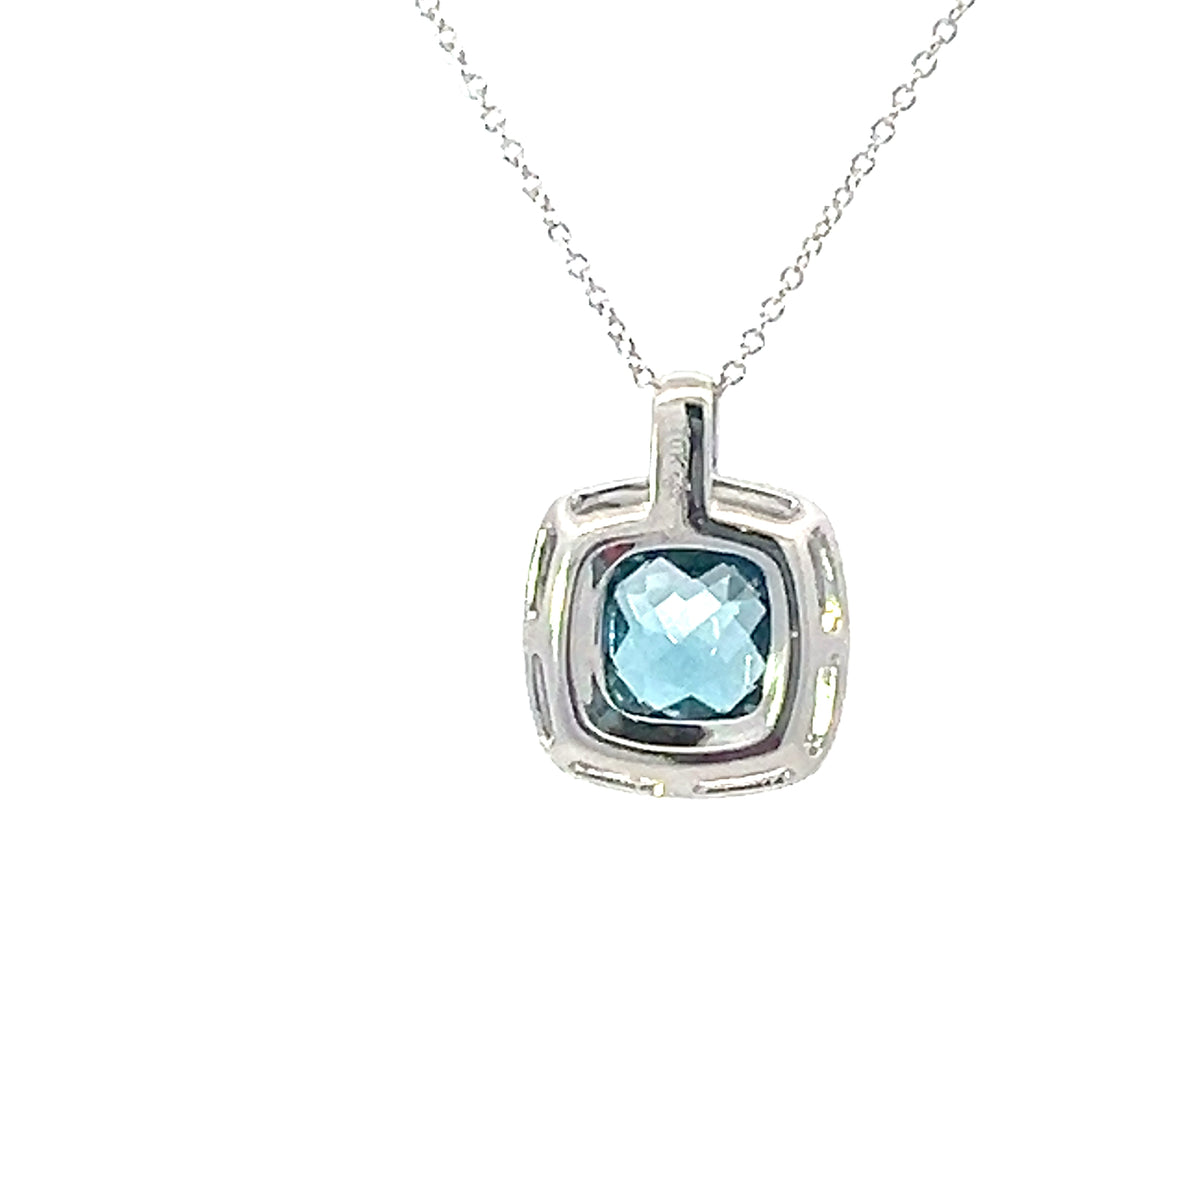 10K White Gold London Blue Topaz, Diamond and White Enamel Necklace - 18 Inches